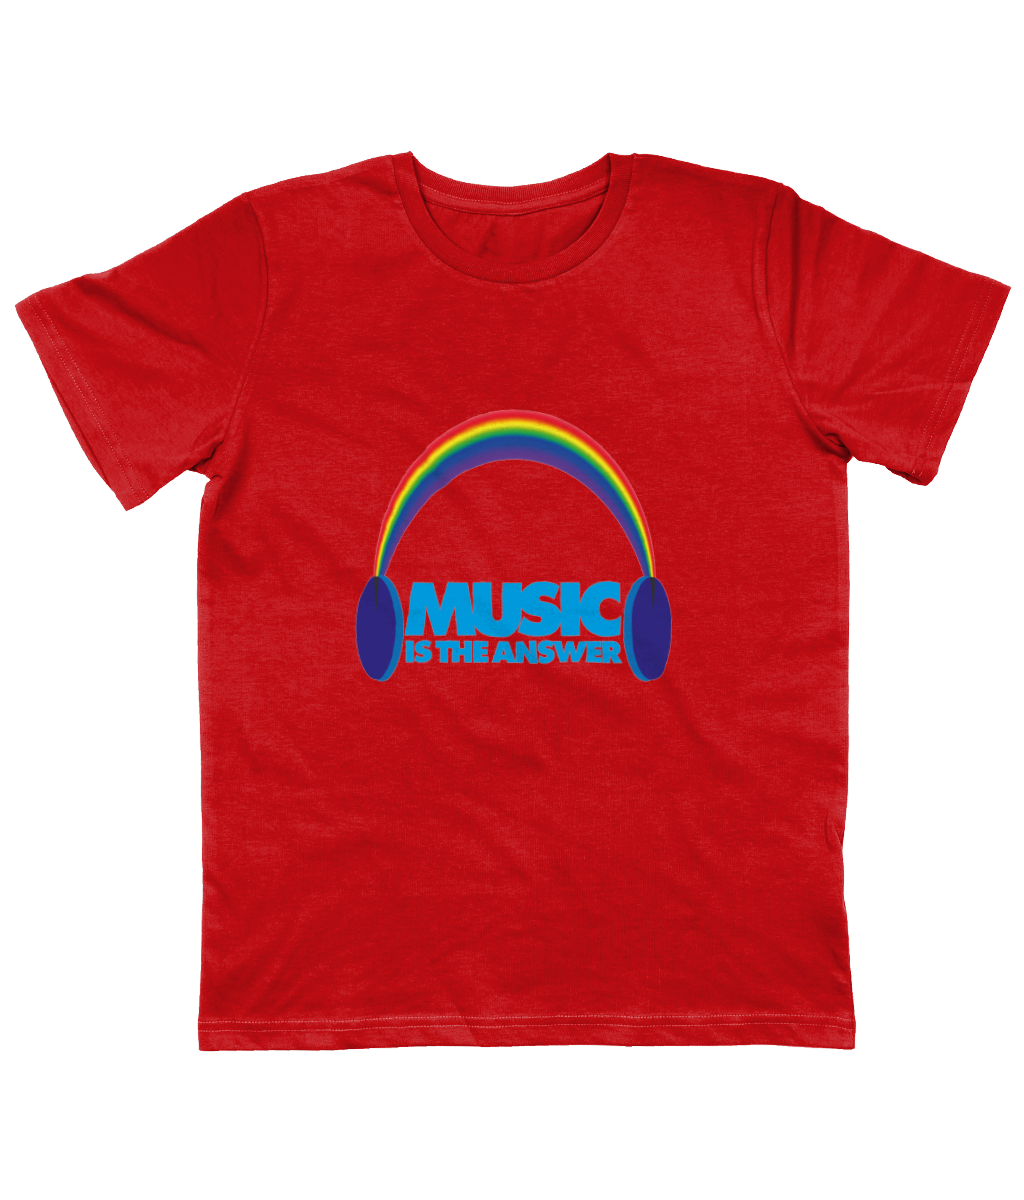 Kids T-Shirt Rainbow Headphones